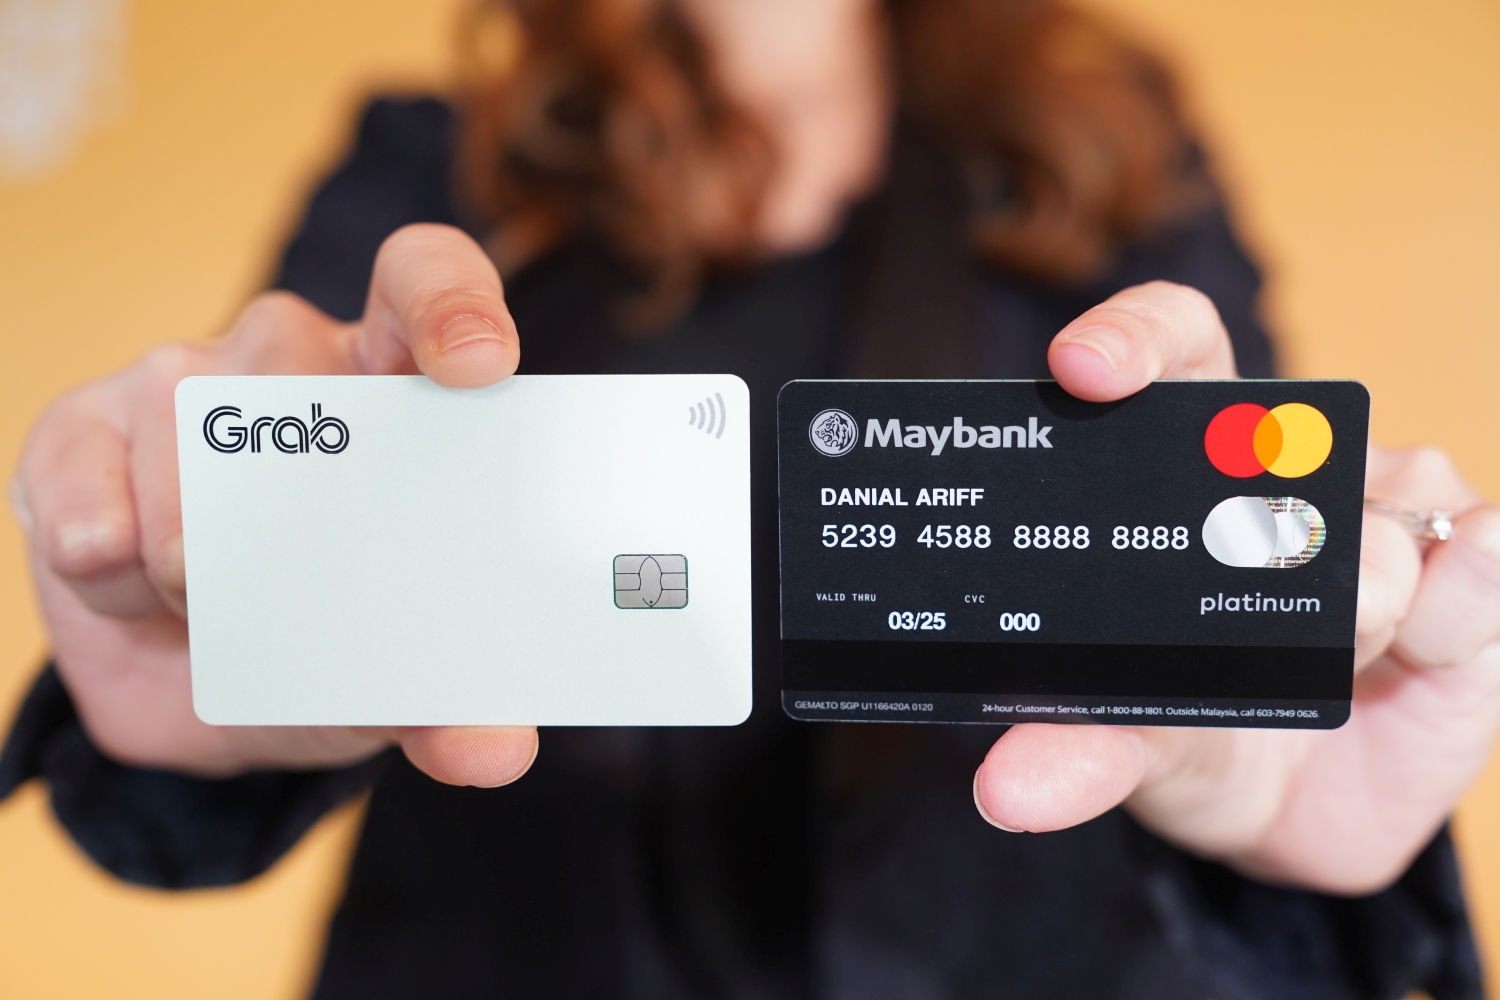 200818 Grab Credit Card Maybank Platinum 